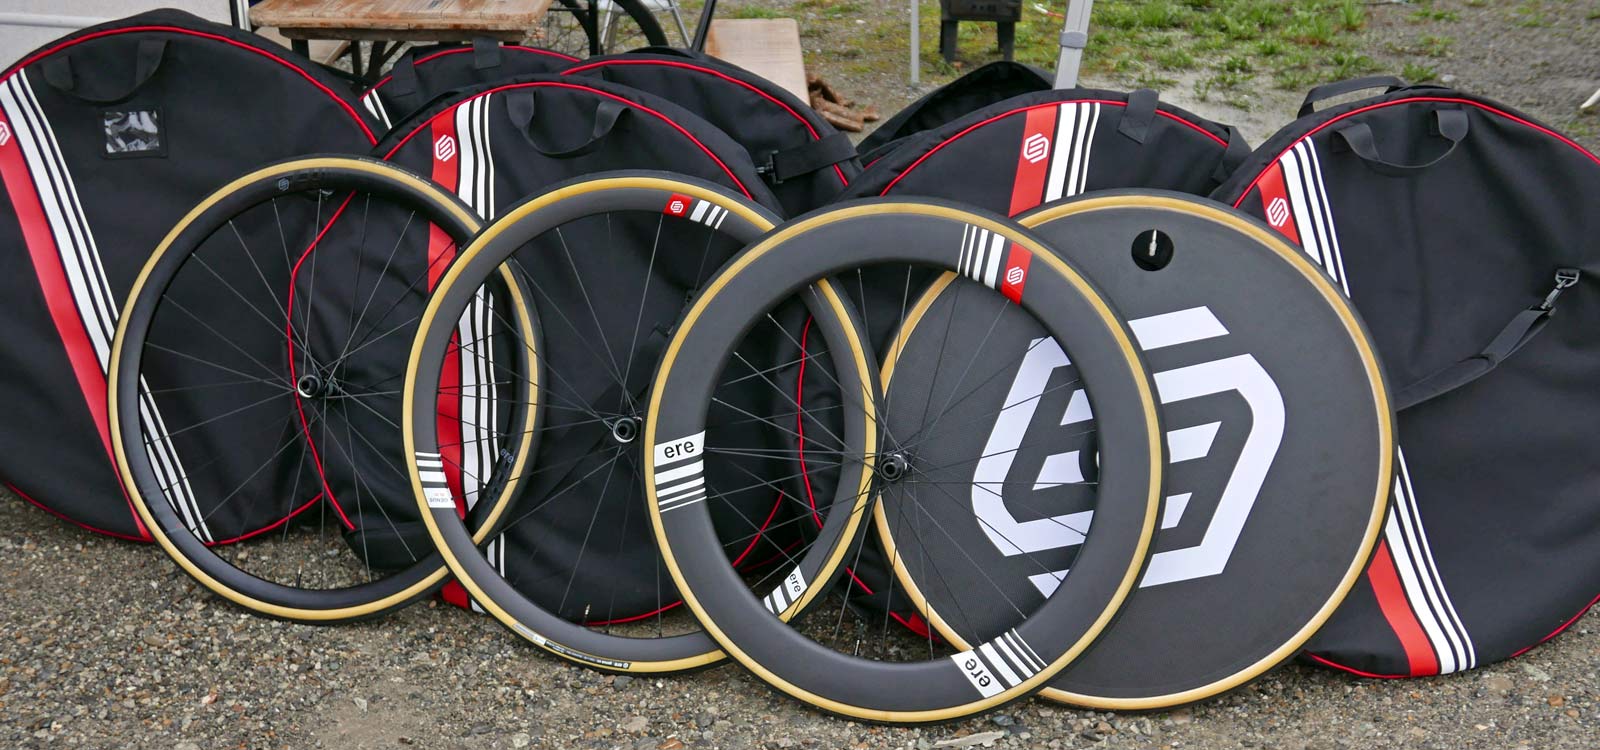 ERE Research Genus Omnia Explorator components, carbon aluminum gravel road bike wheels and saddles